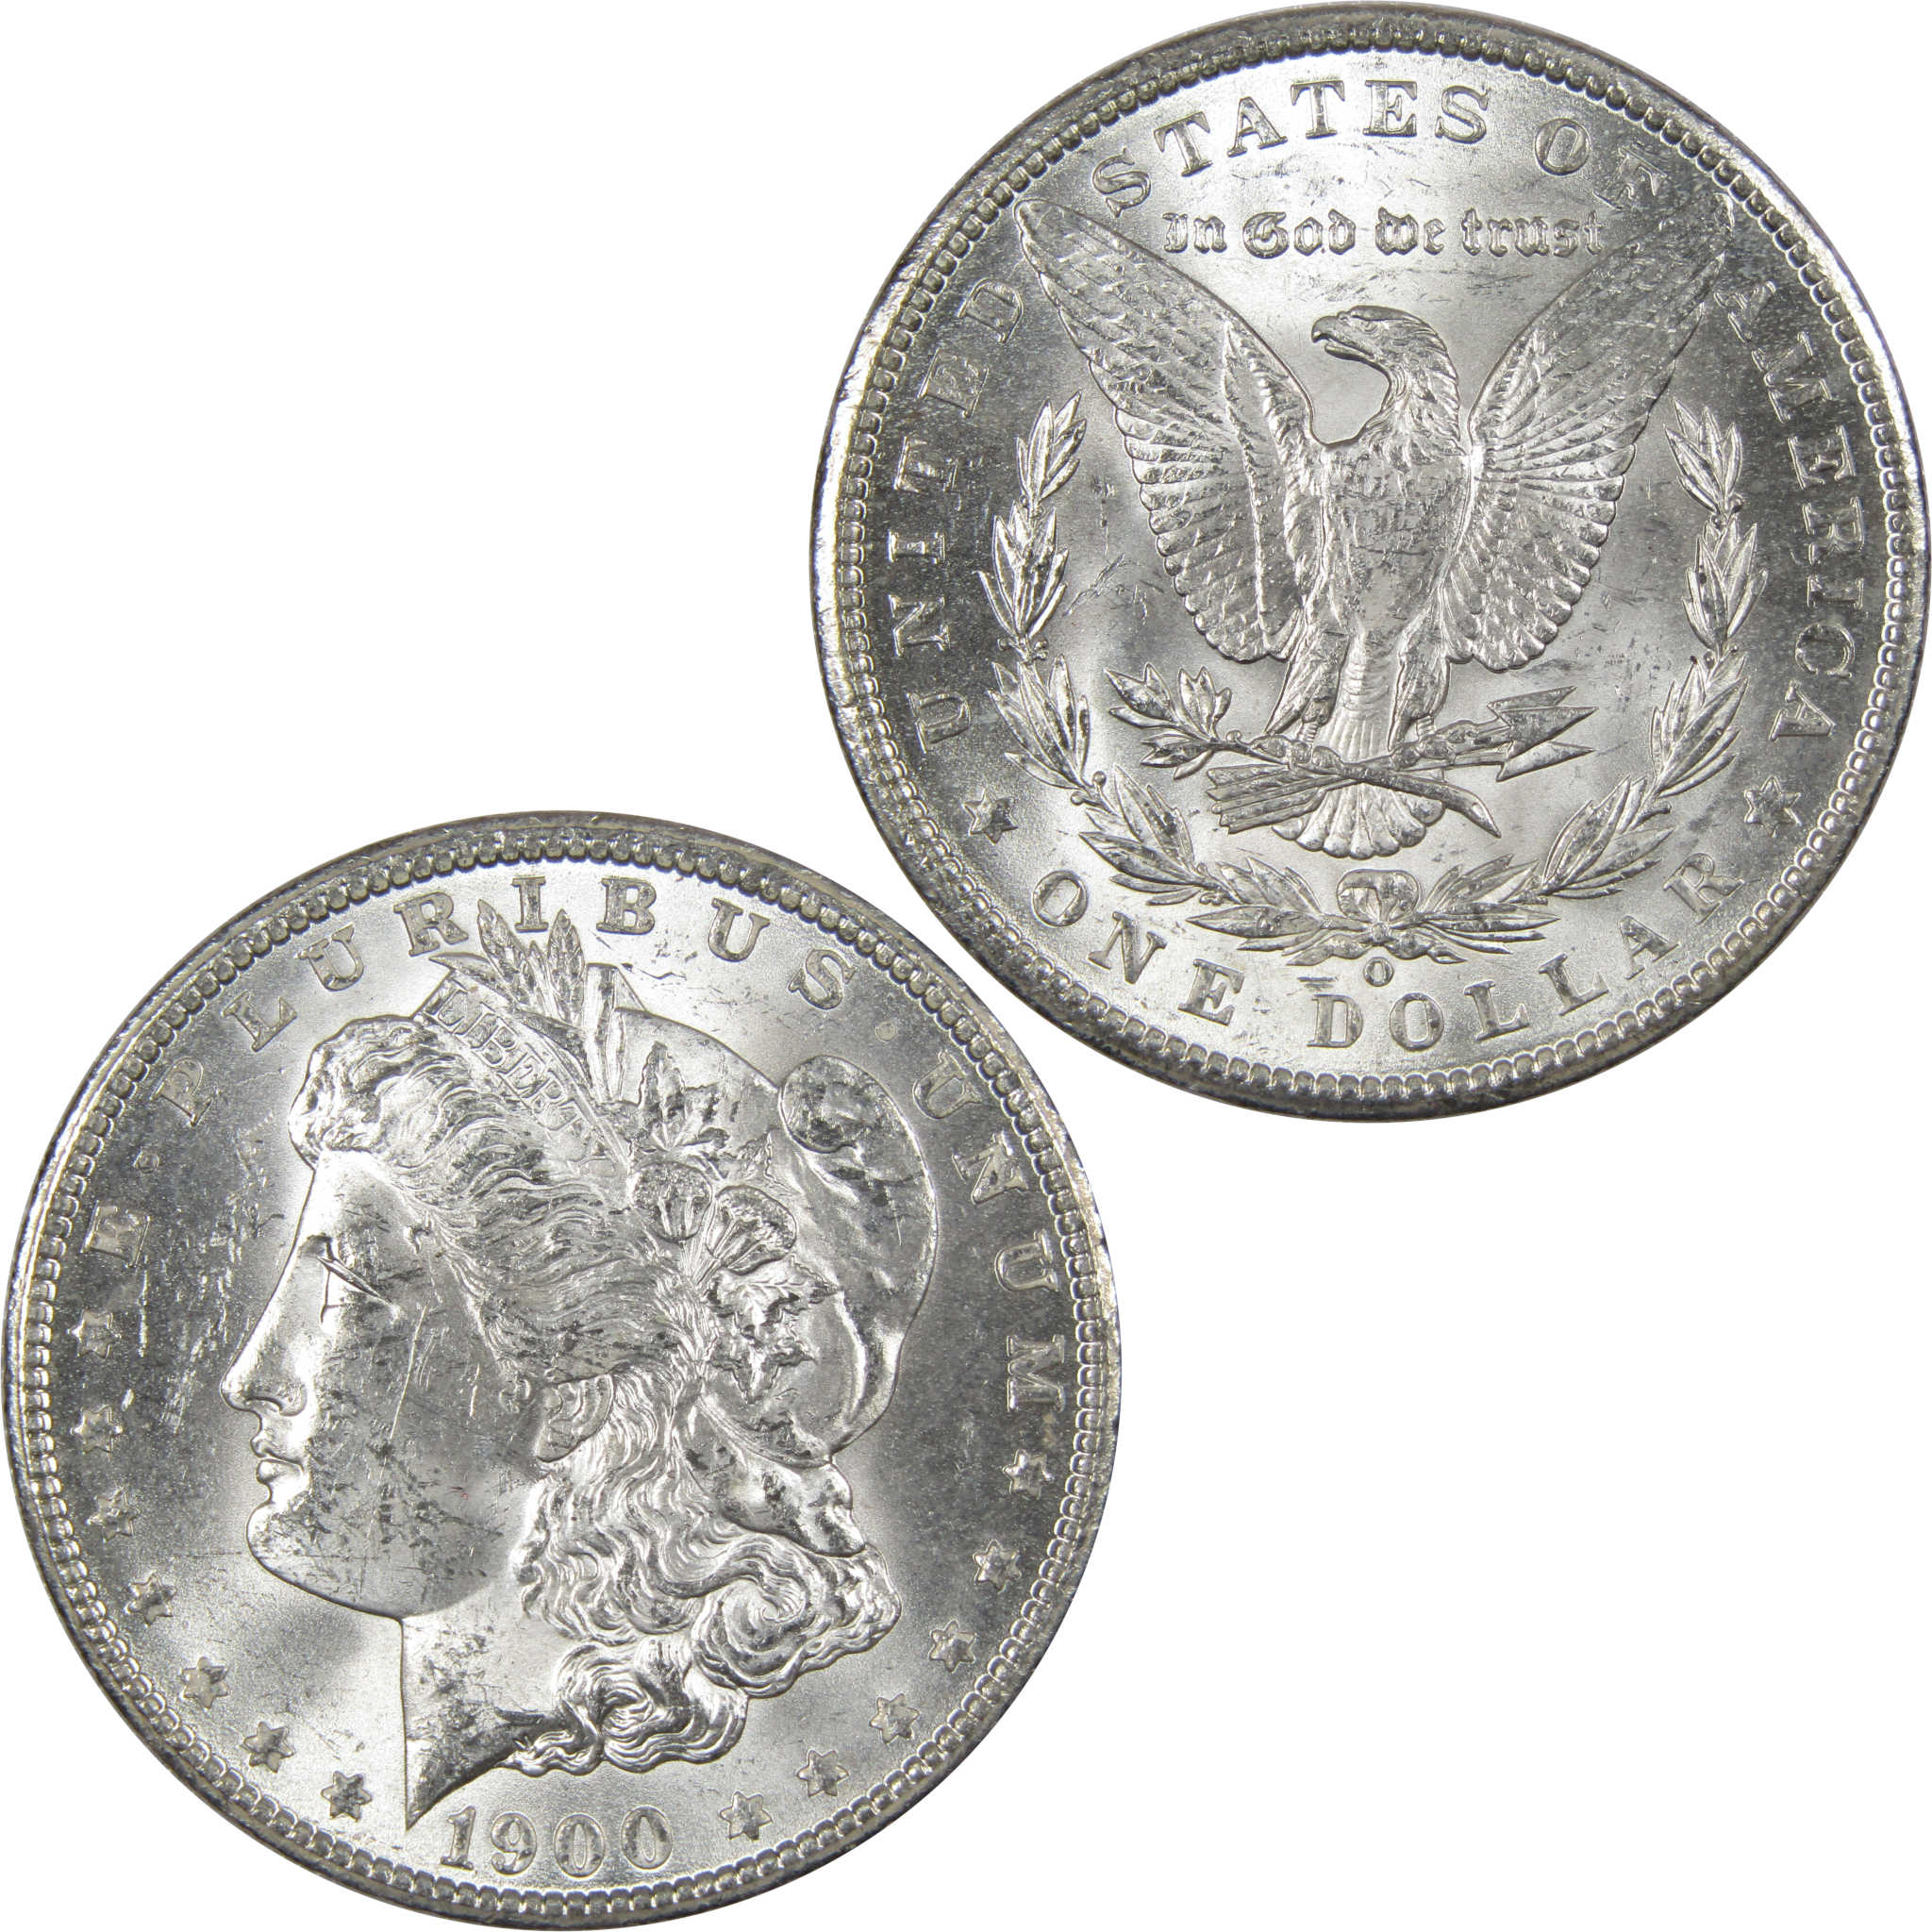 1900 O Morgan Dollar BU Uncirculated Mint State 90% Silver SKU:IPC9773 - Morgan coin - Morgan silver dollar - Morgan silver dollar for sale - Profile Coins &amp; Collectibles